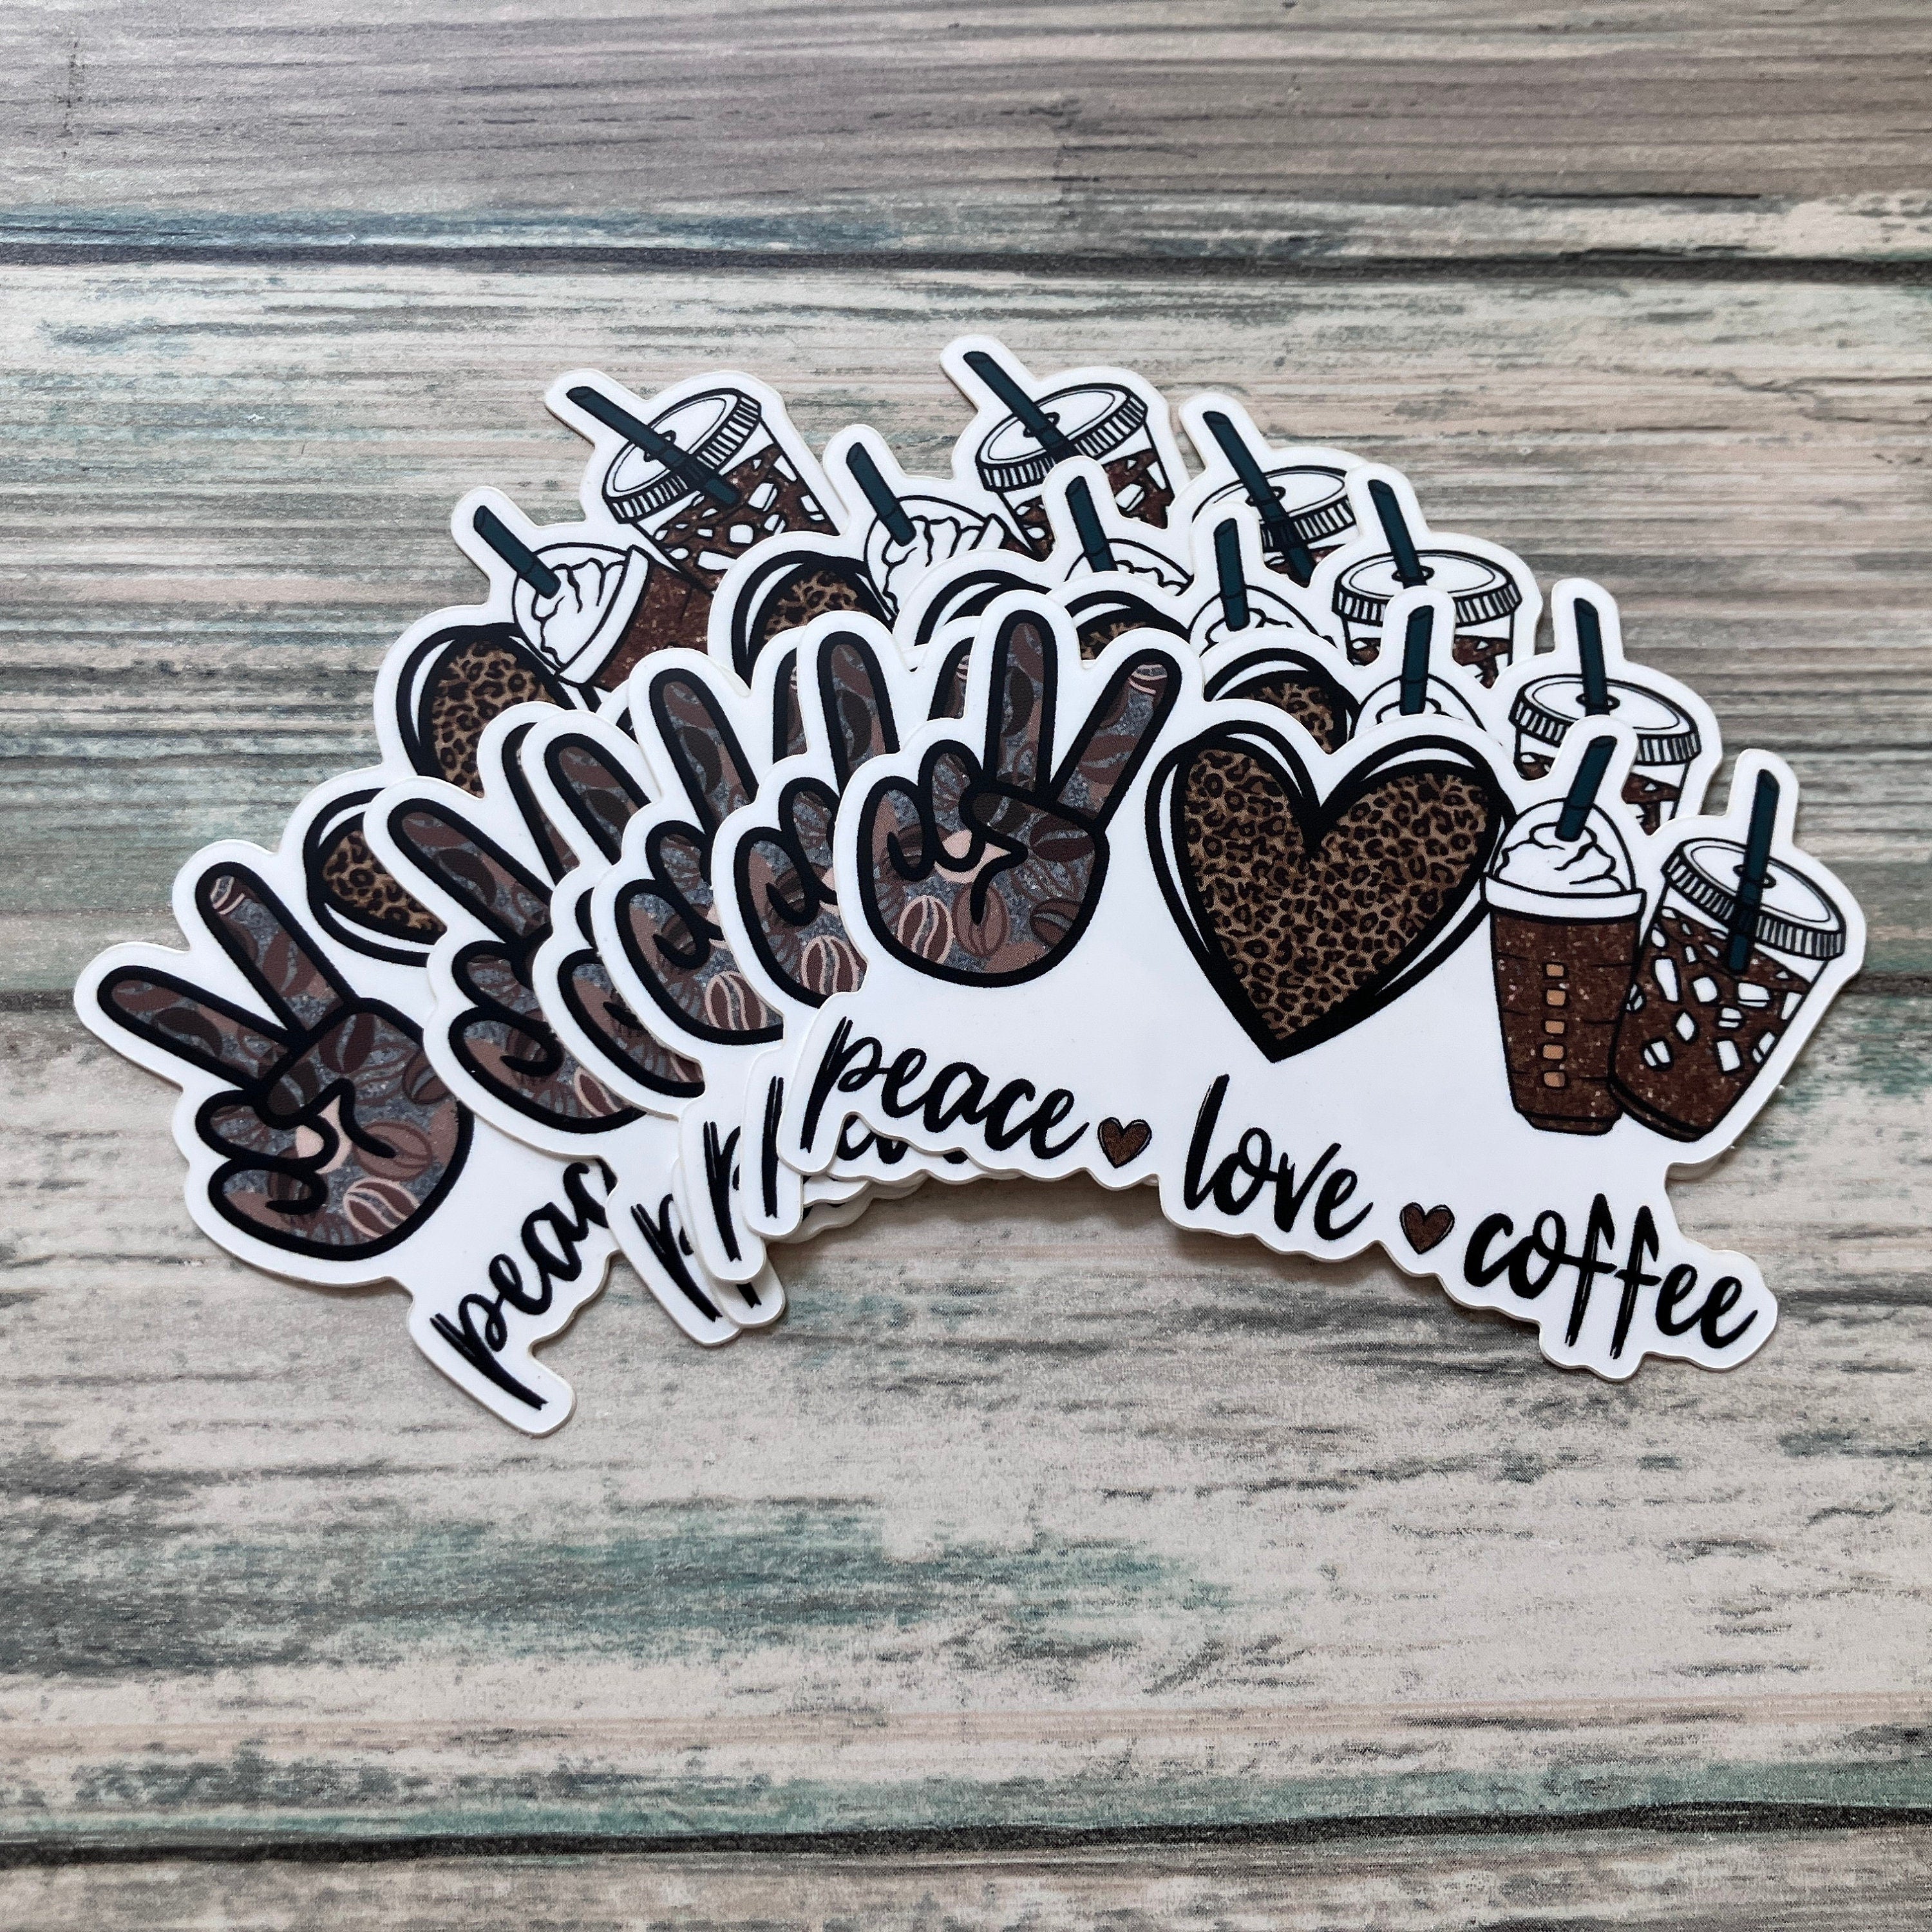 Peace Love & Coffee Sticker - Vinyl Sticker - Coffee Sticker - Love Sticker - Peace Sticker - Water Bottle Sticker - Laptop Sticker